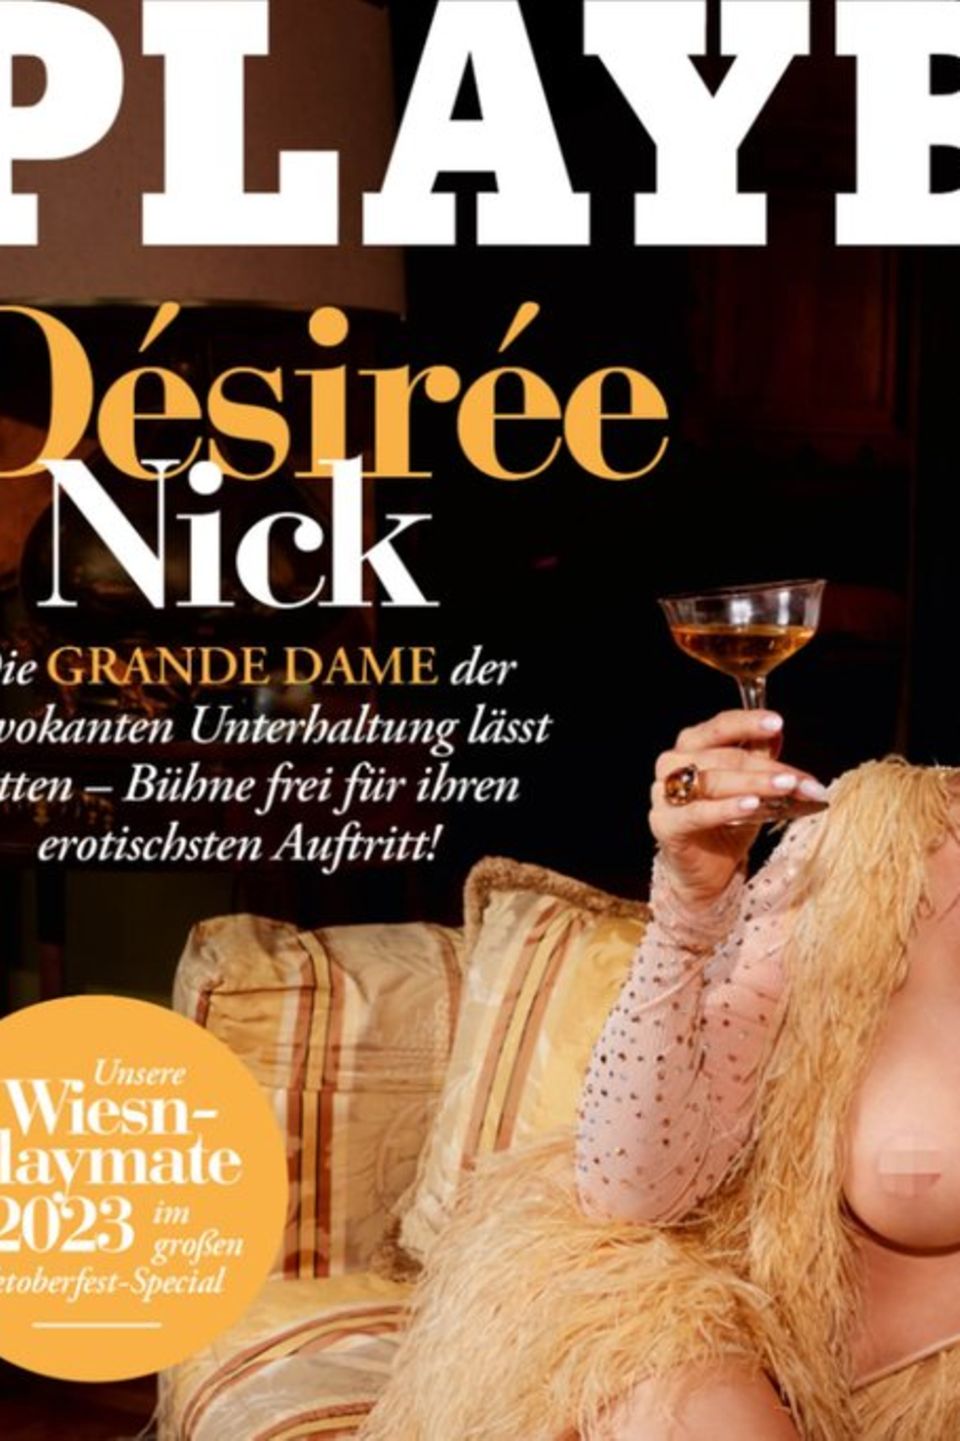 Désirée Nick auf dem Cover der Oktober-Ausgabe des "Playboy".